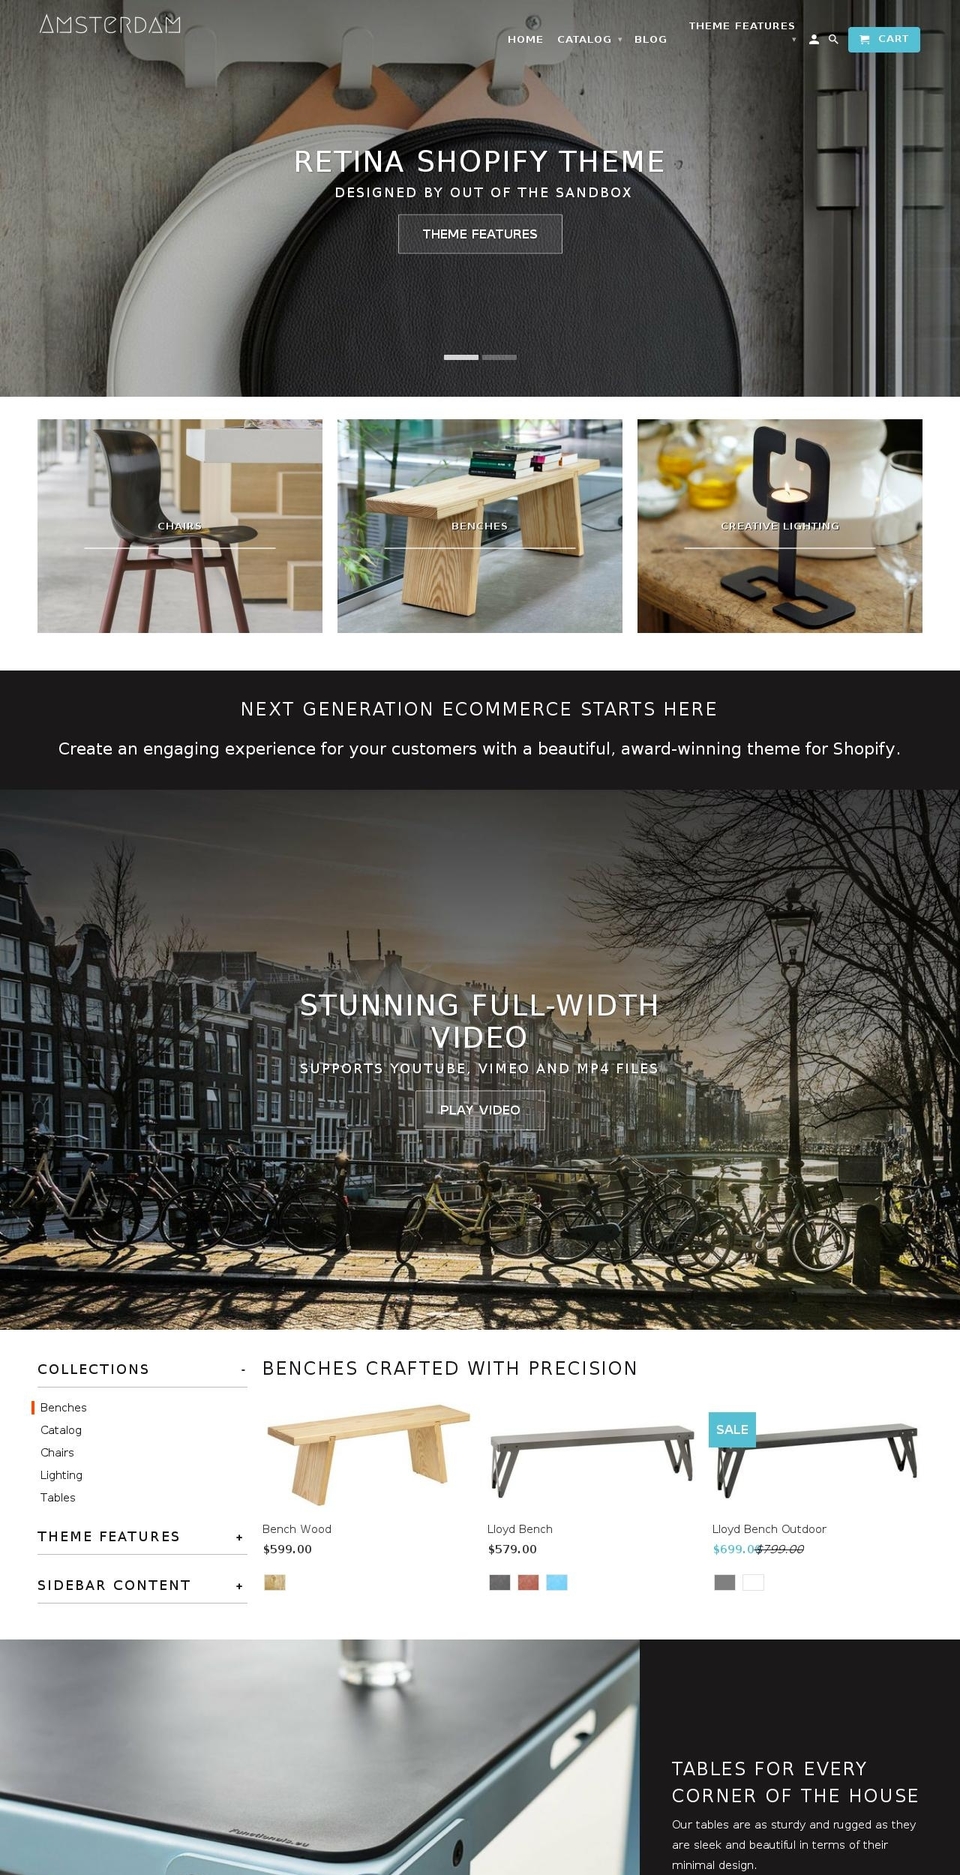 retina-theme-amsterdam.myshopify.com shopify website screenshot